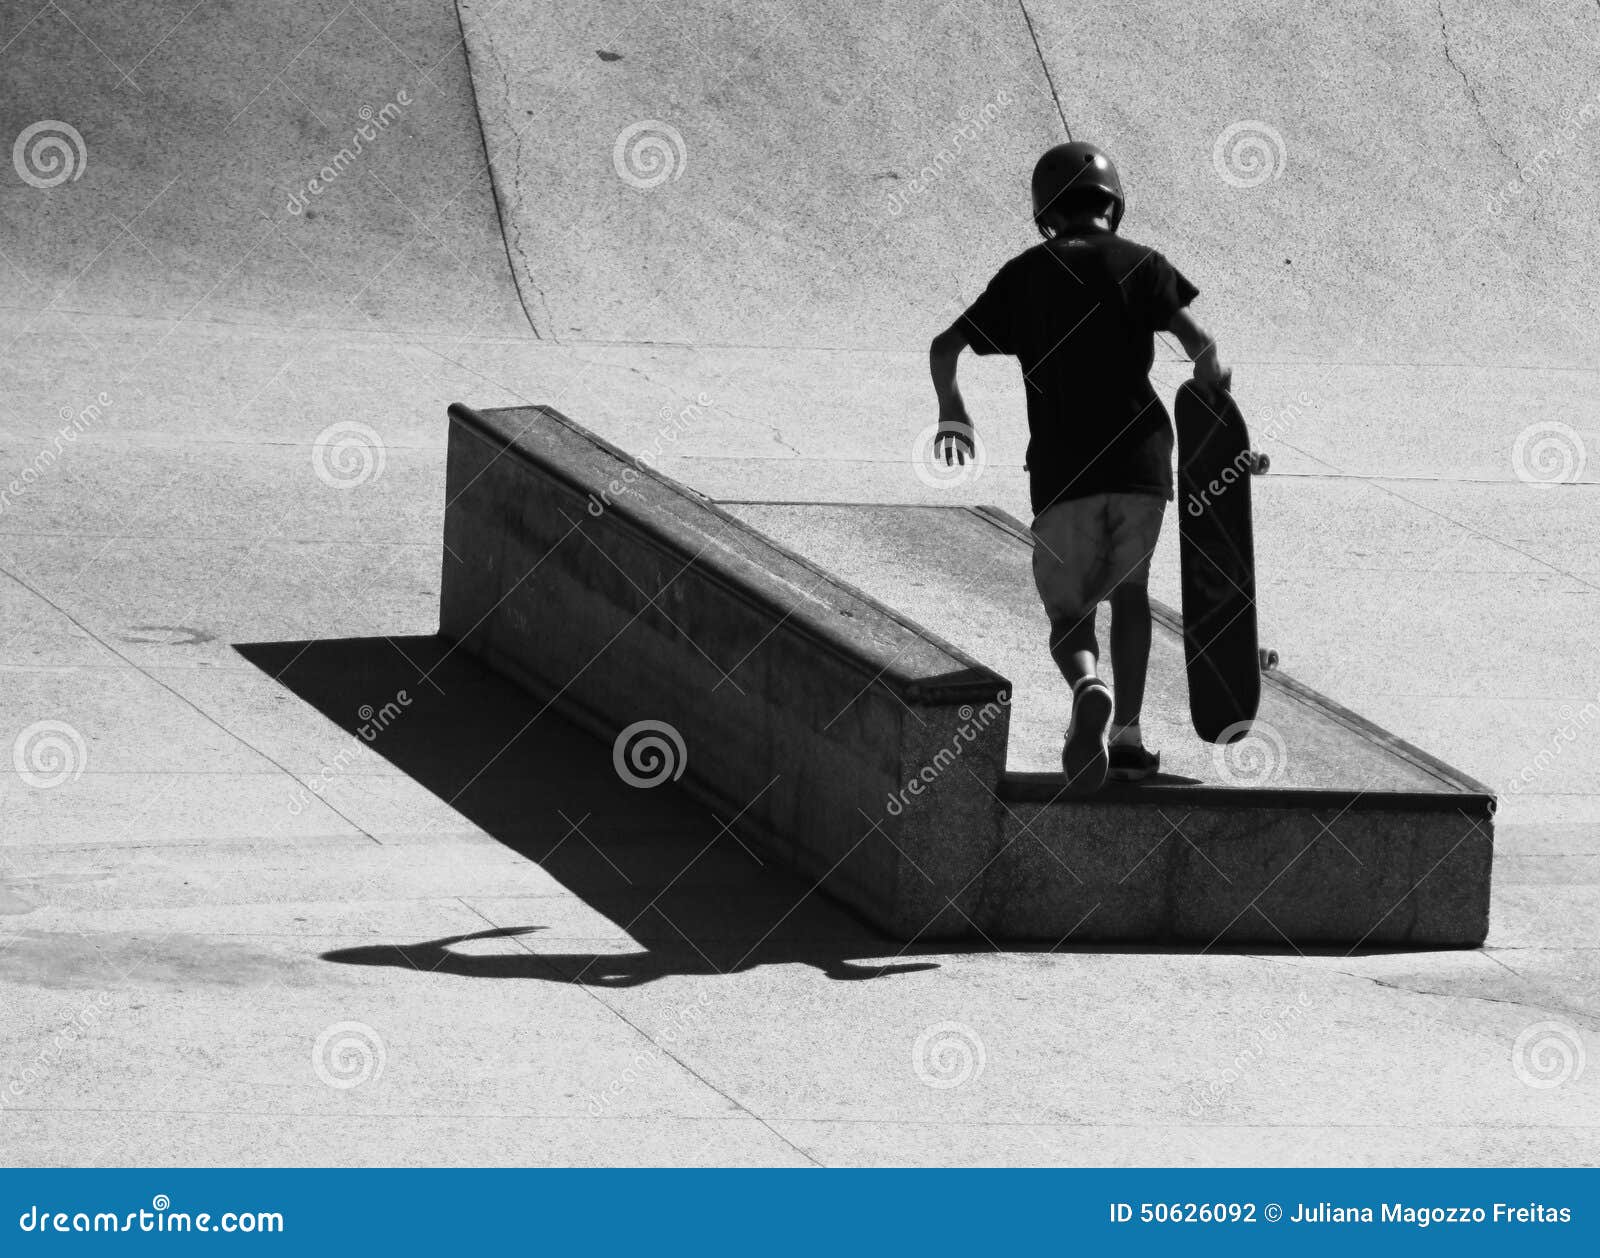 skateboarding in sao bernardo do campo